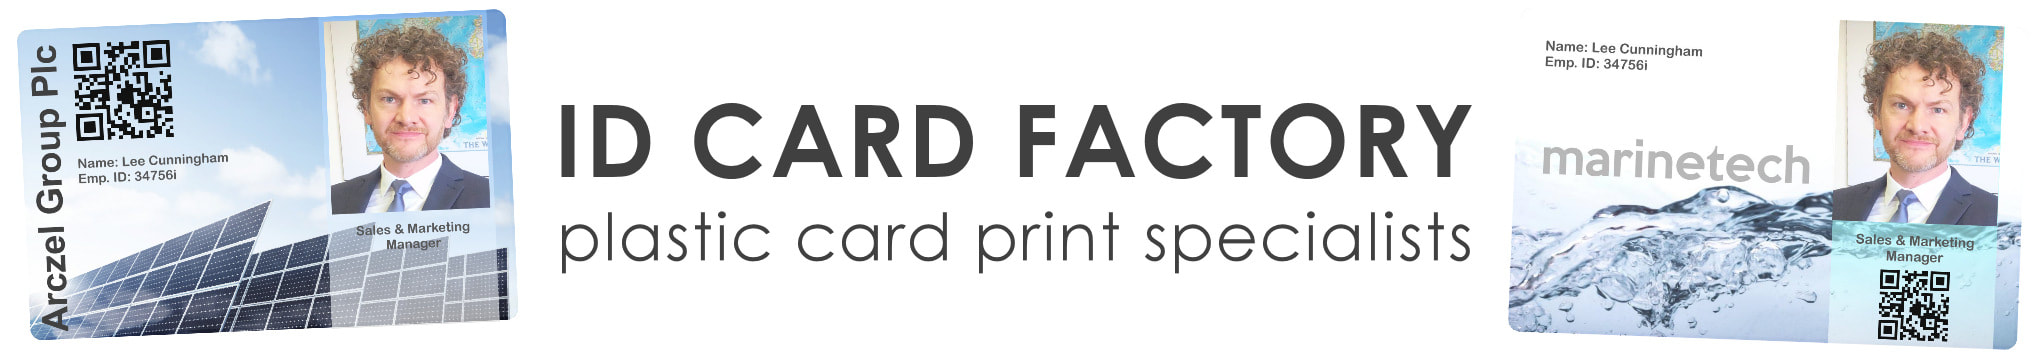 Oxford ID card printing | staff photo ID cards | company employee ID card print service | Local Identity Card Printing | Custom Design 